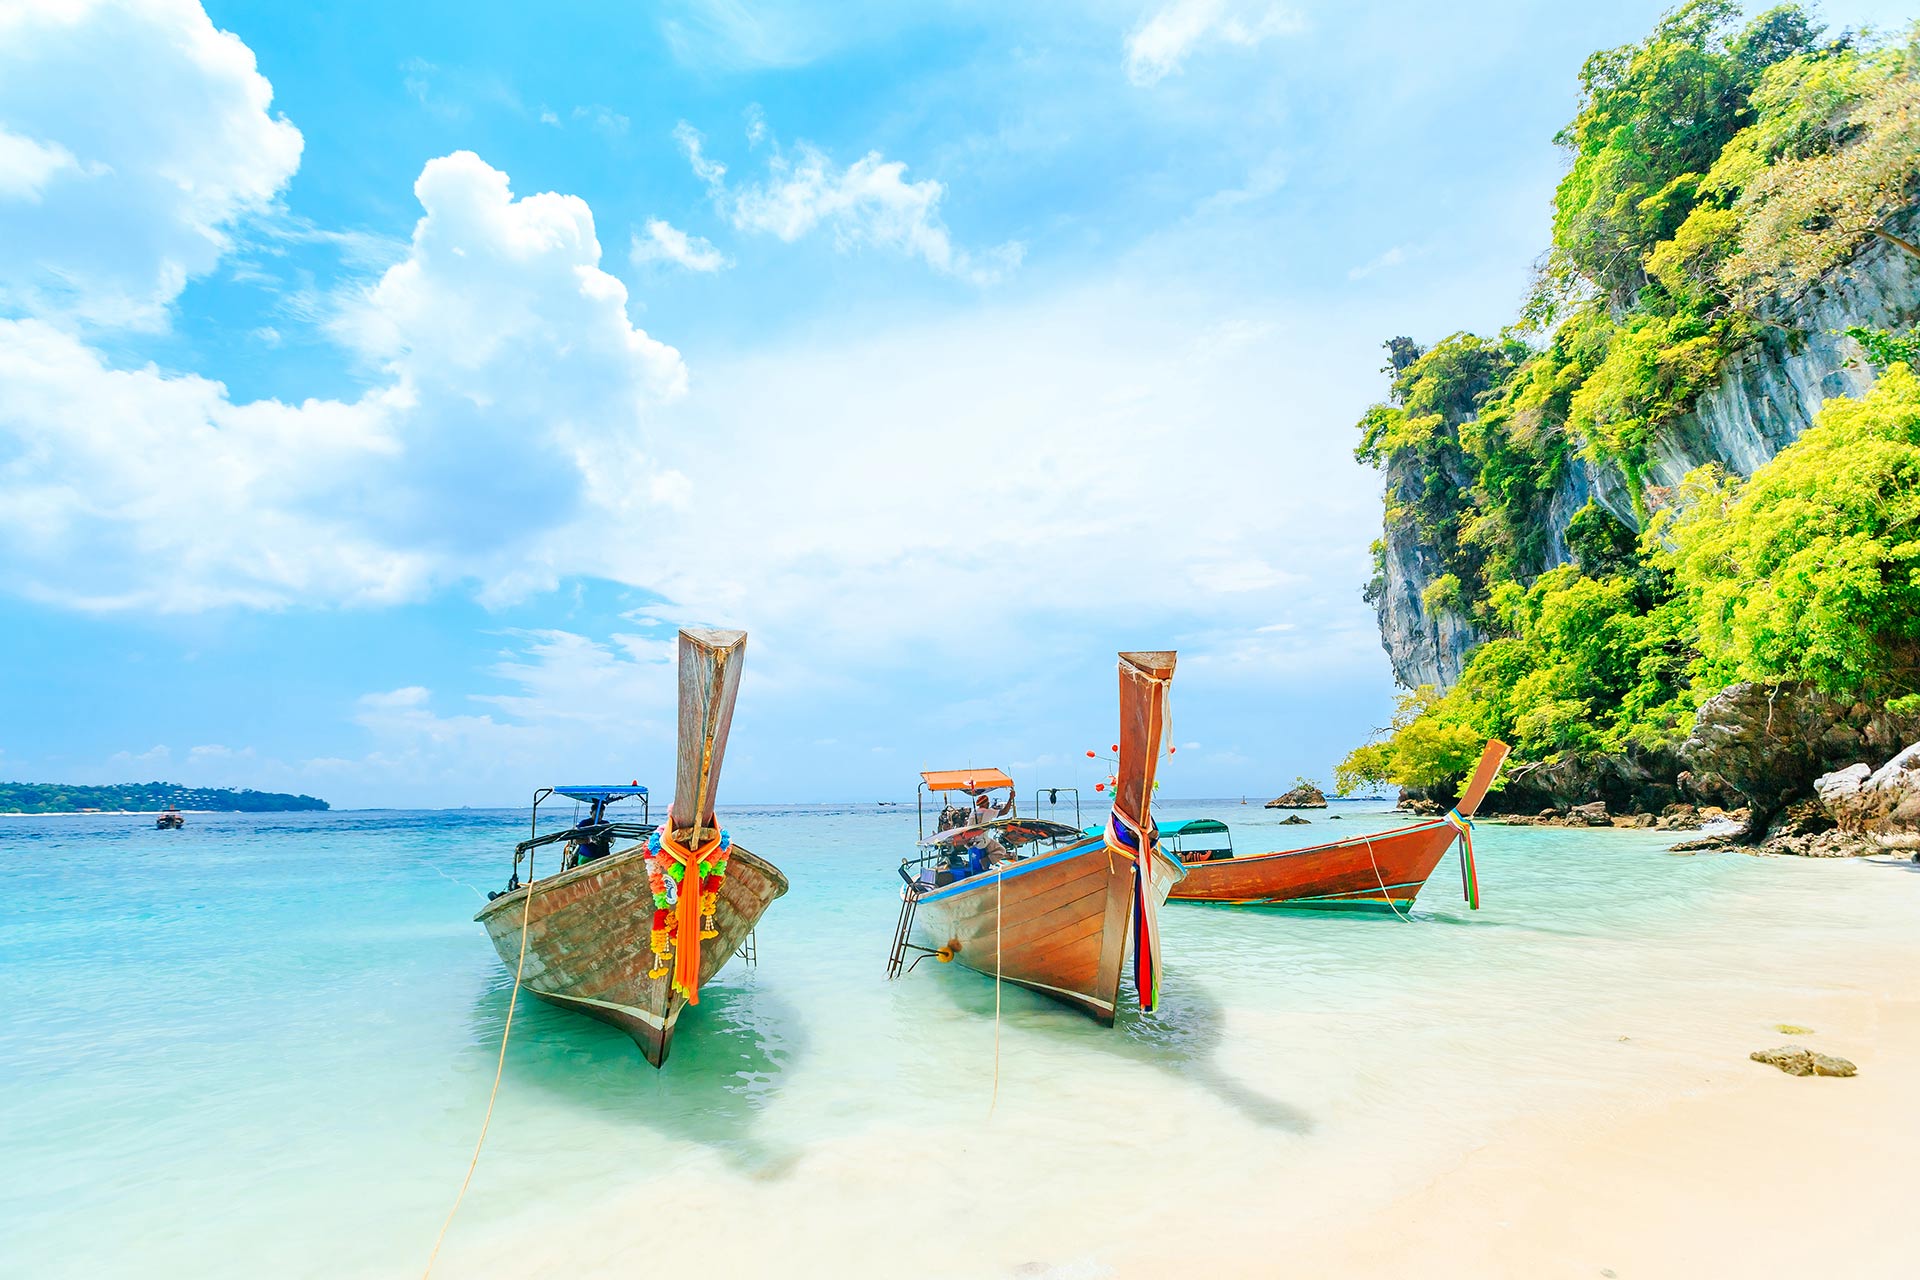 Longtale boat on the white beach at Phuket, Thailand.